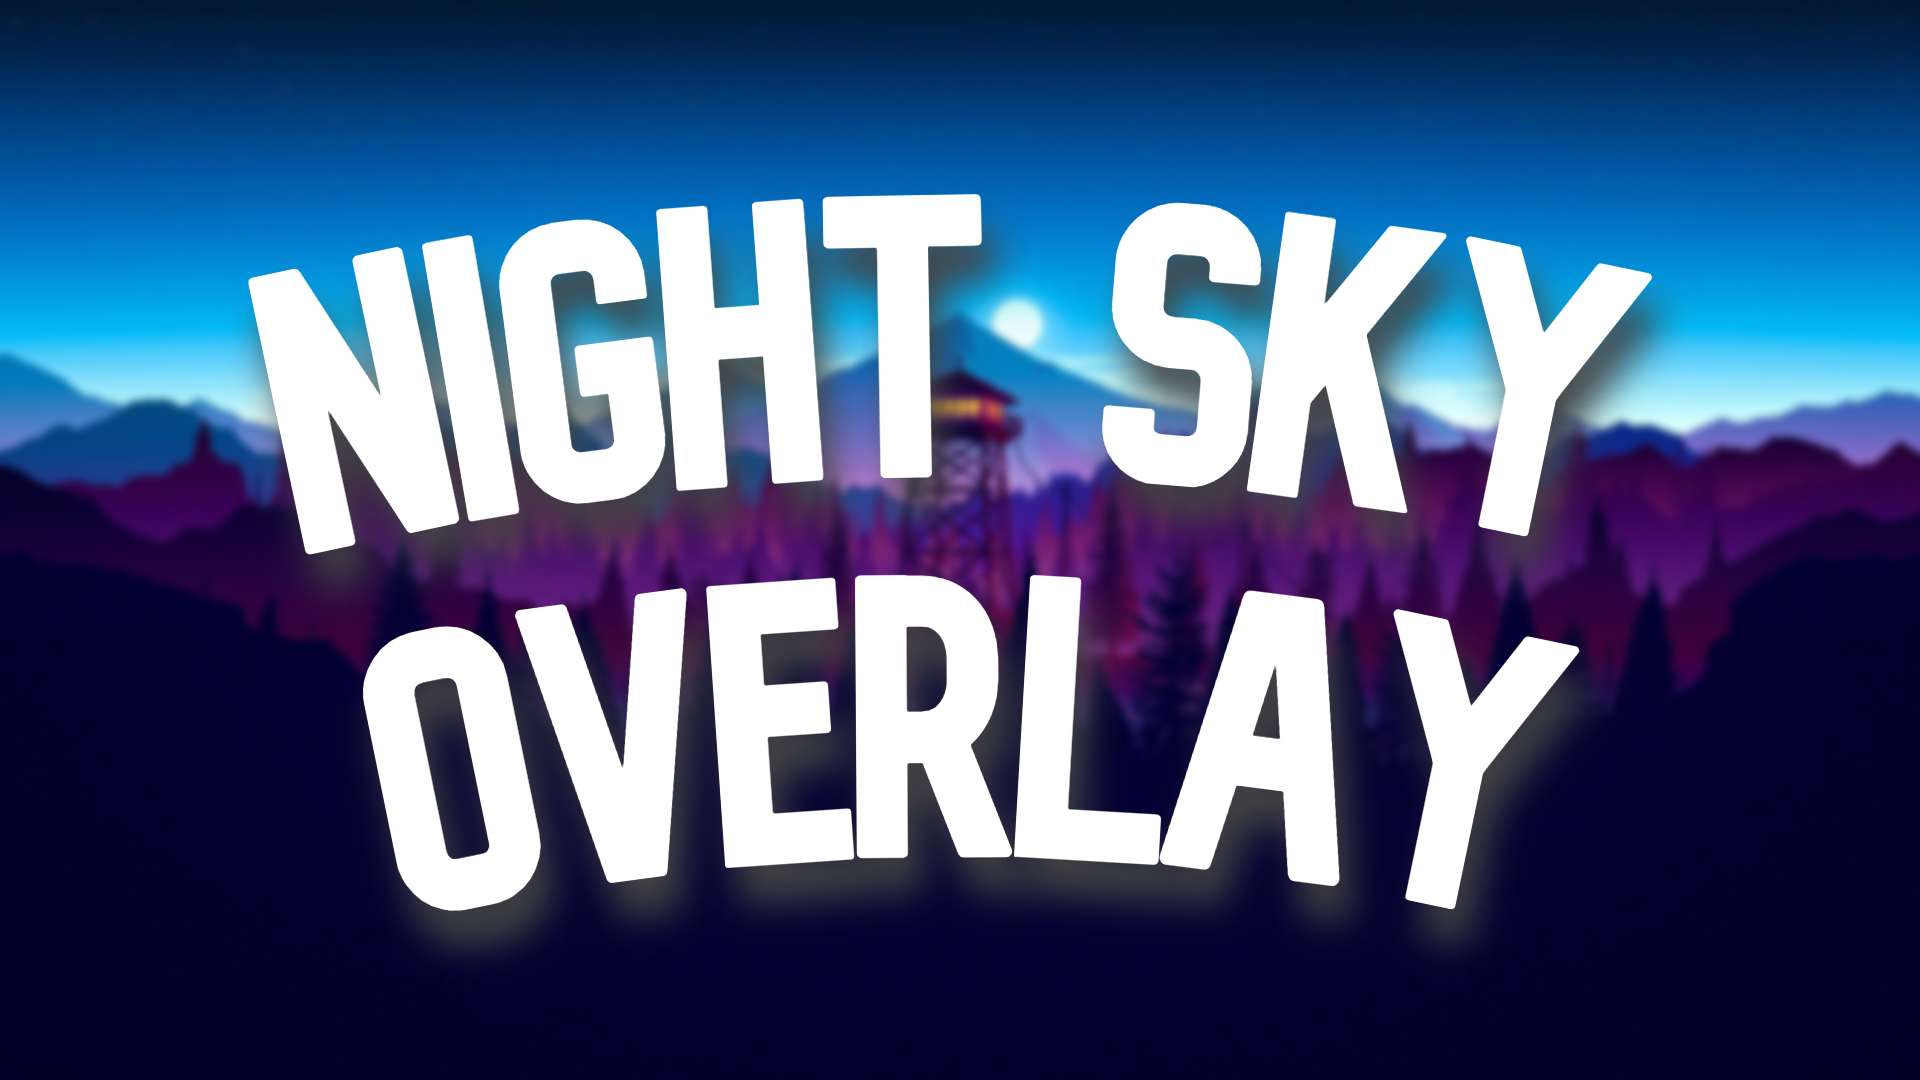 Night Sky Overlay #13 16x by rh56 on PvPRP